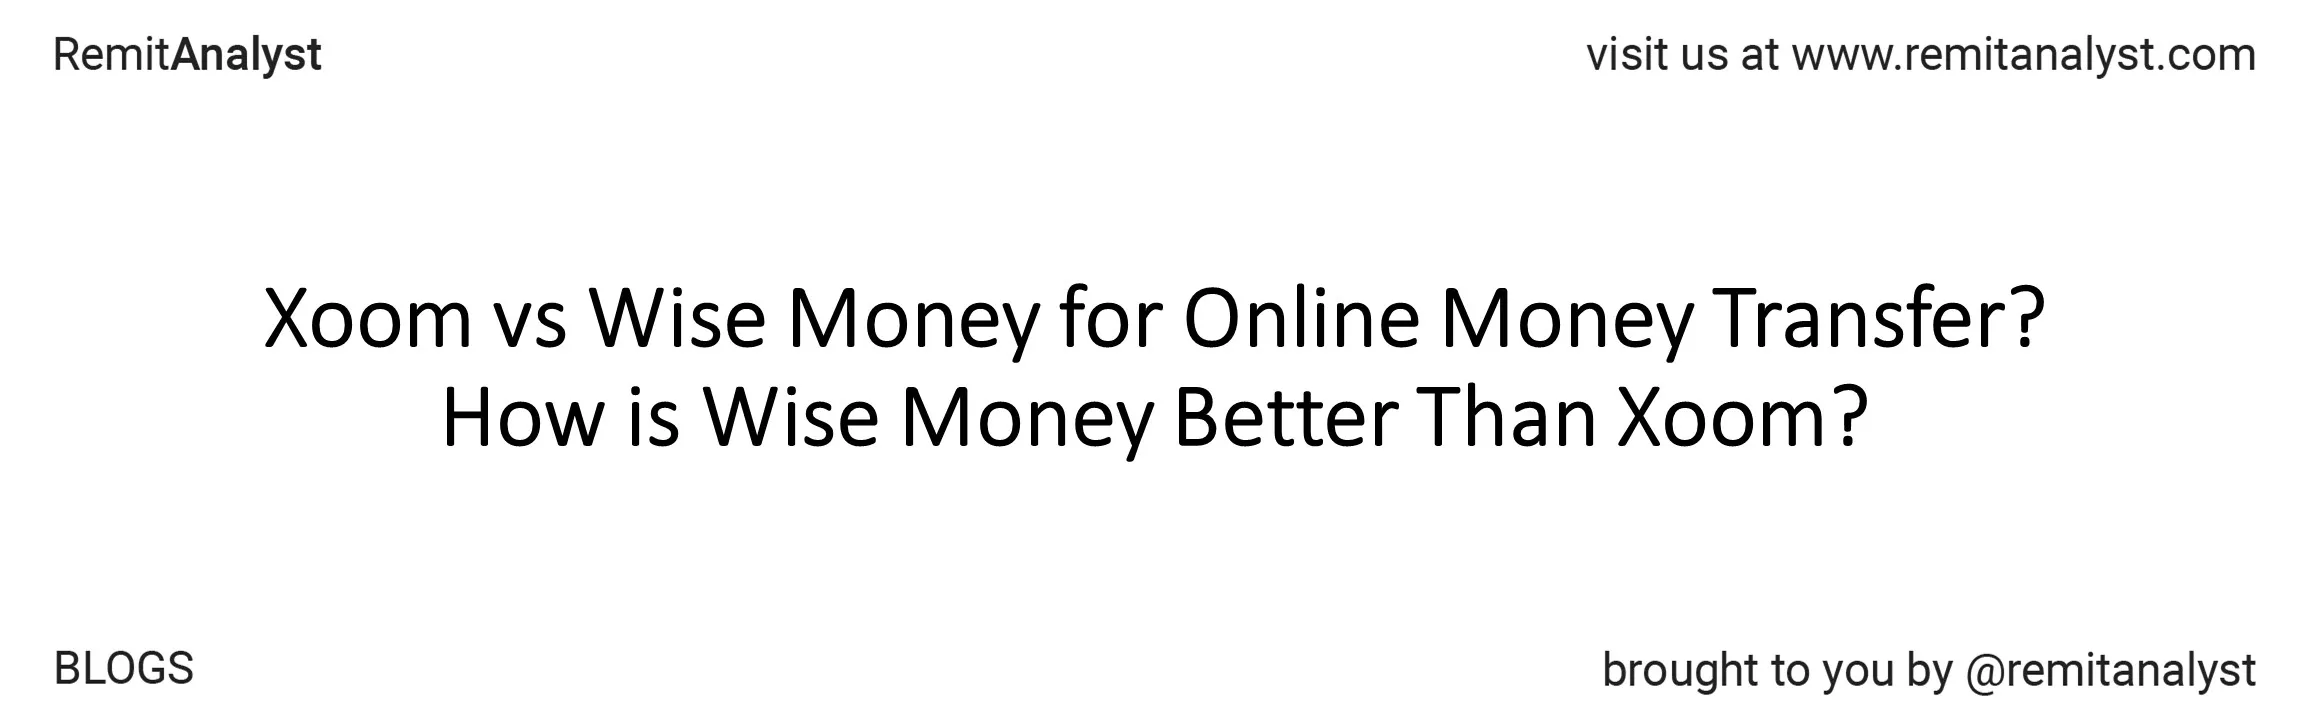 xoom-vs-wise-for-online-money-transfer-title